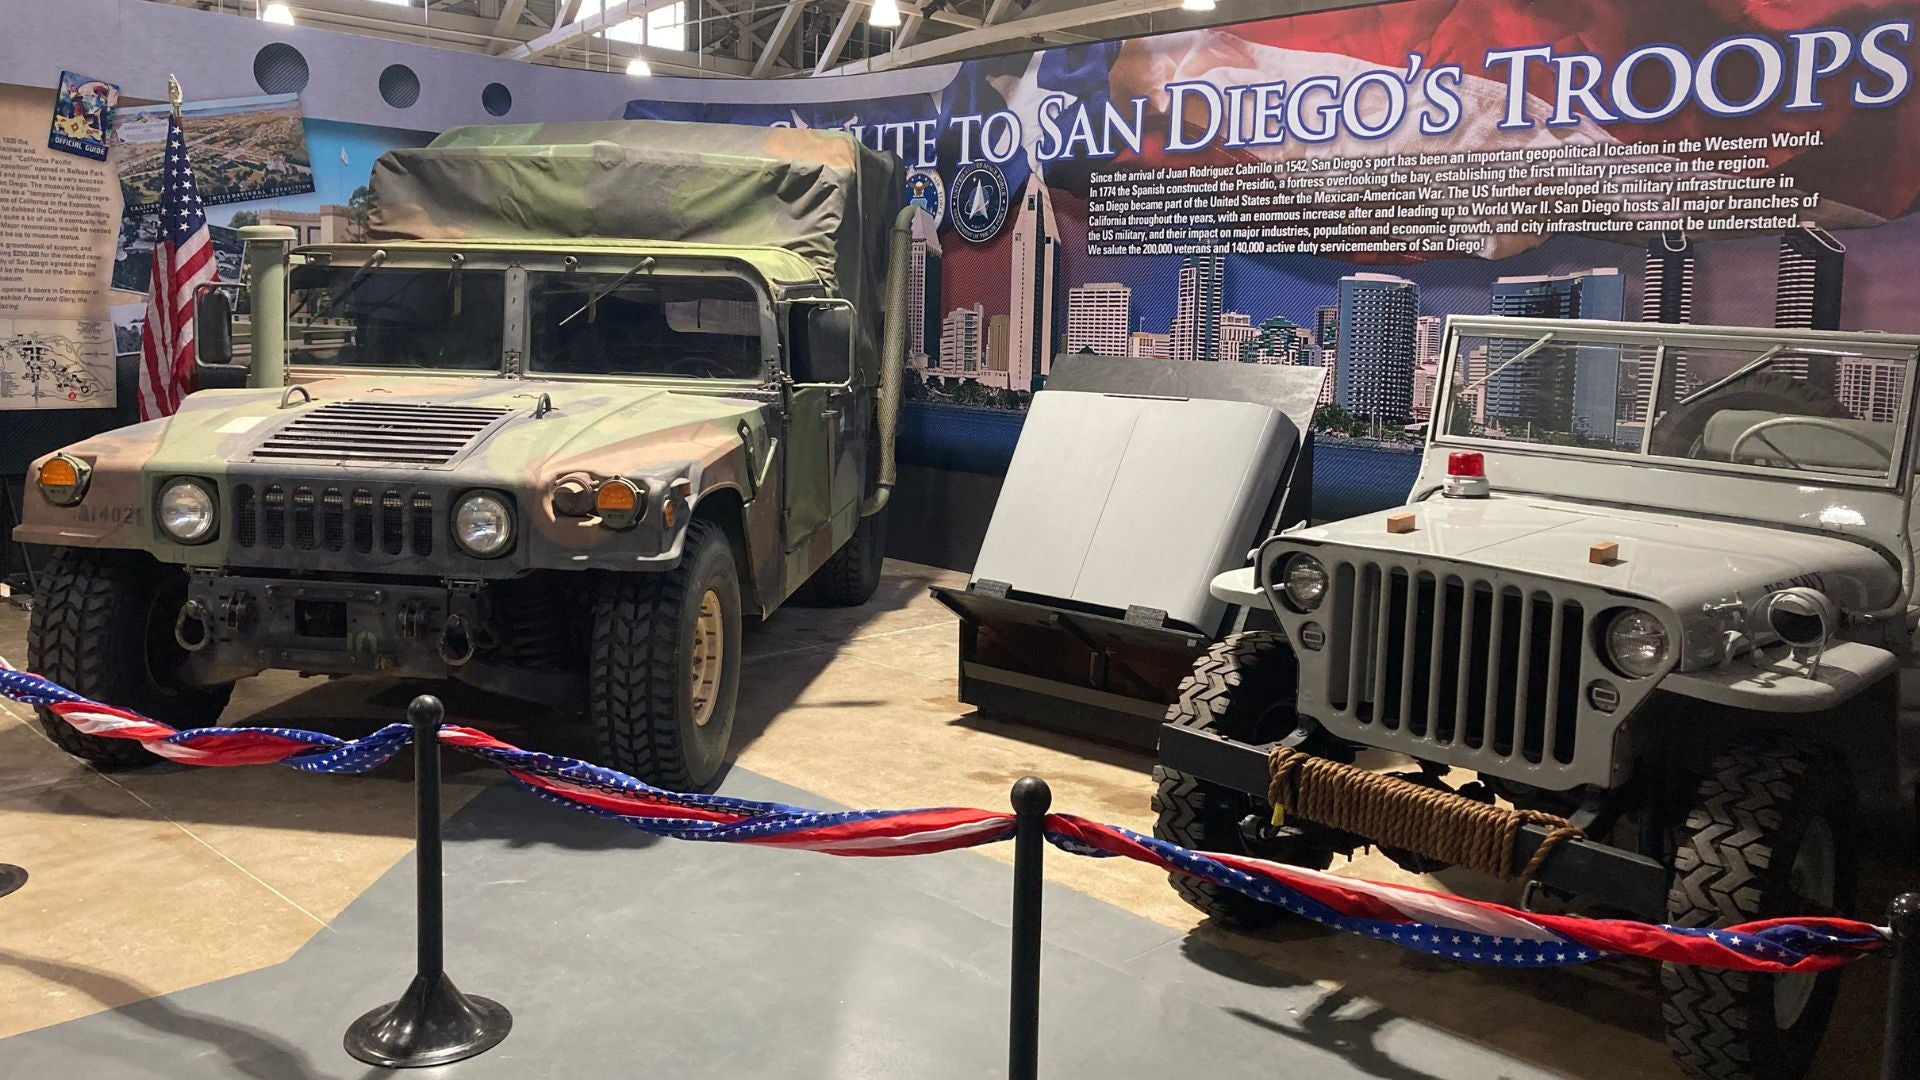 San Diego's Premier Transportation Museum – San Diego Automotive Museum